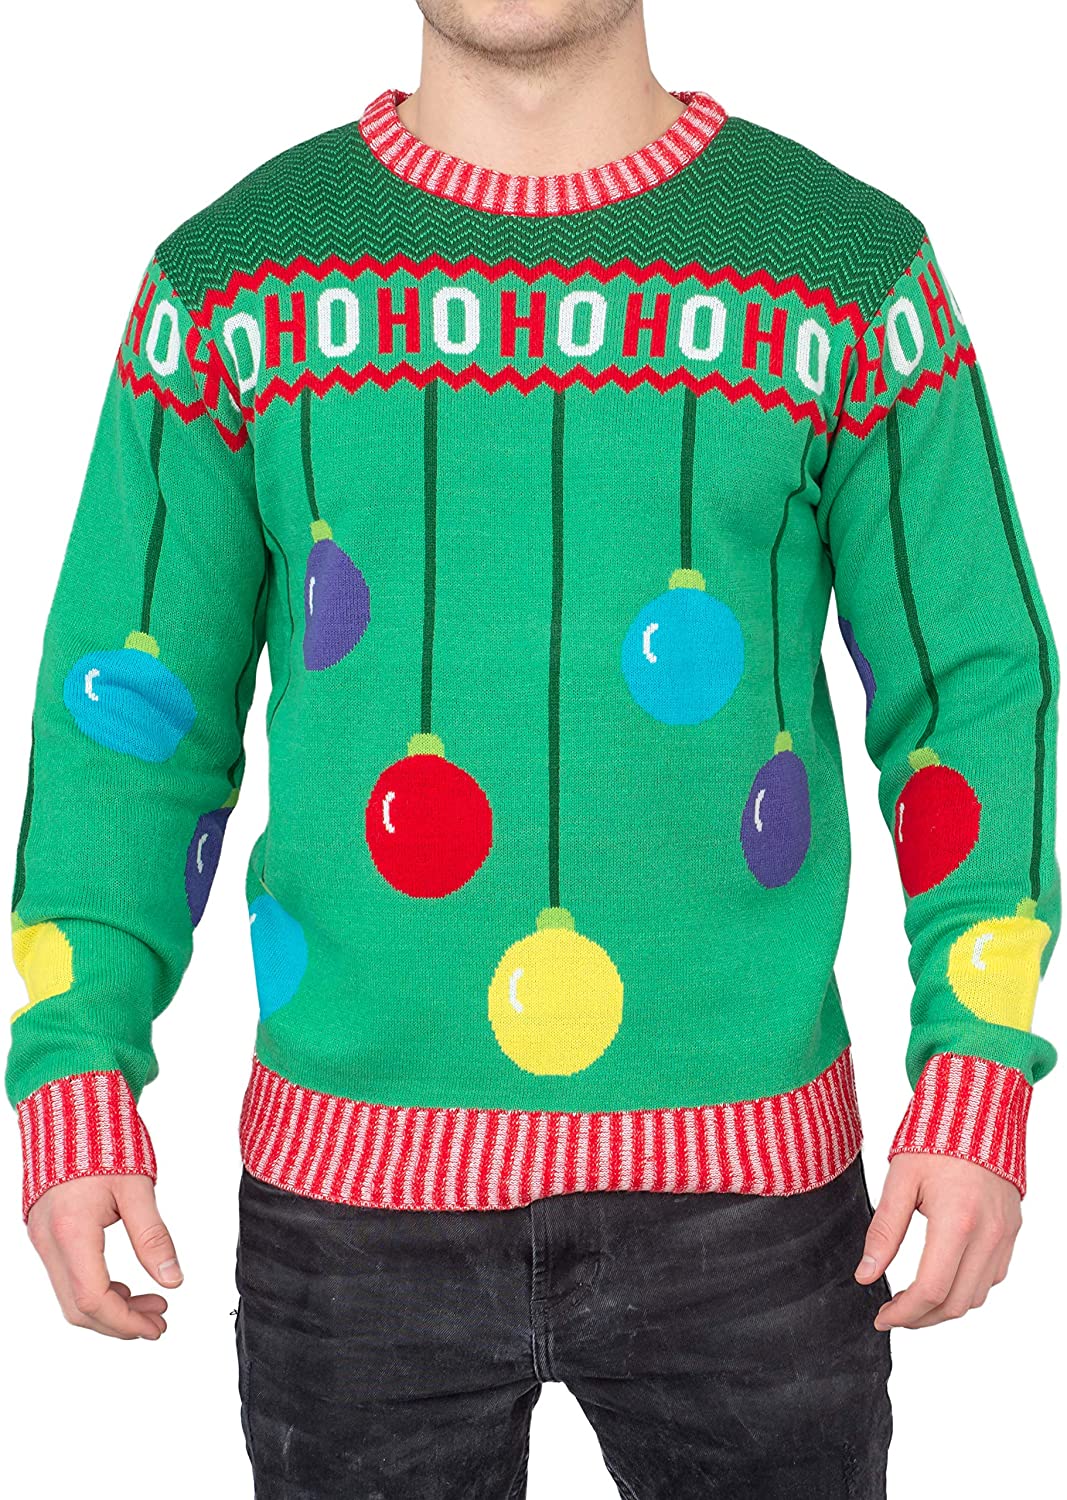 Arthur Ugly Christmas Sweater - image 1 of 3